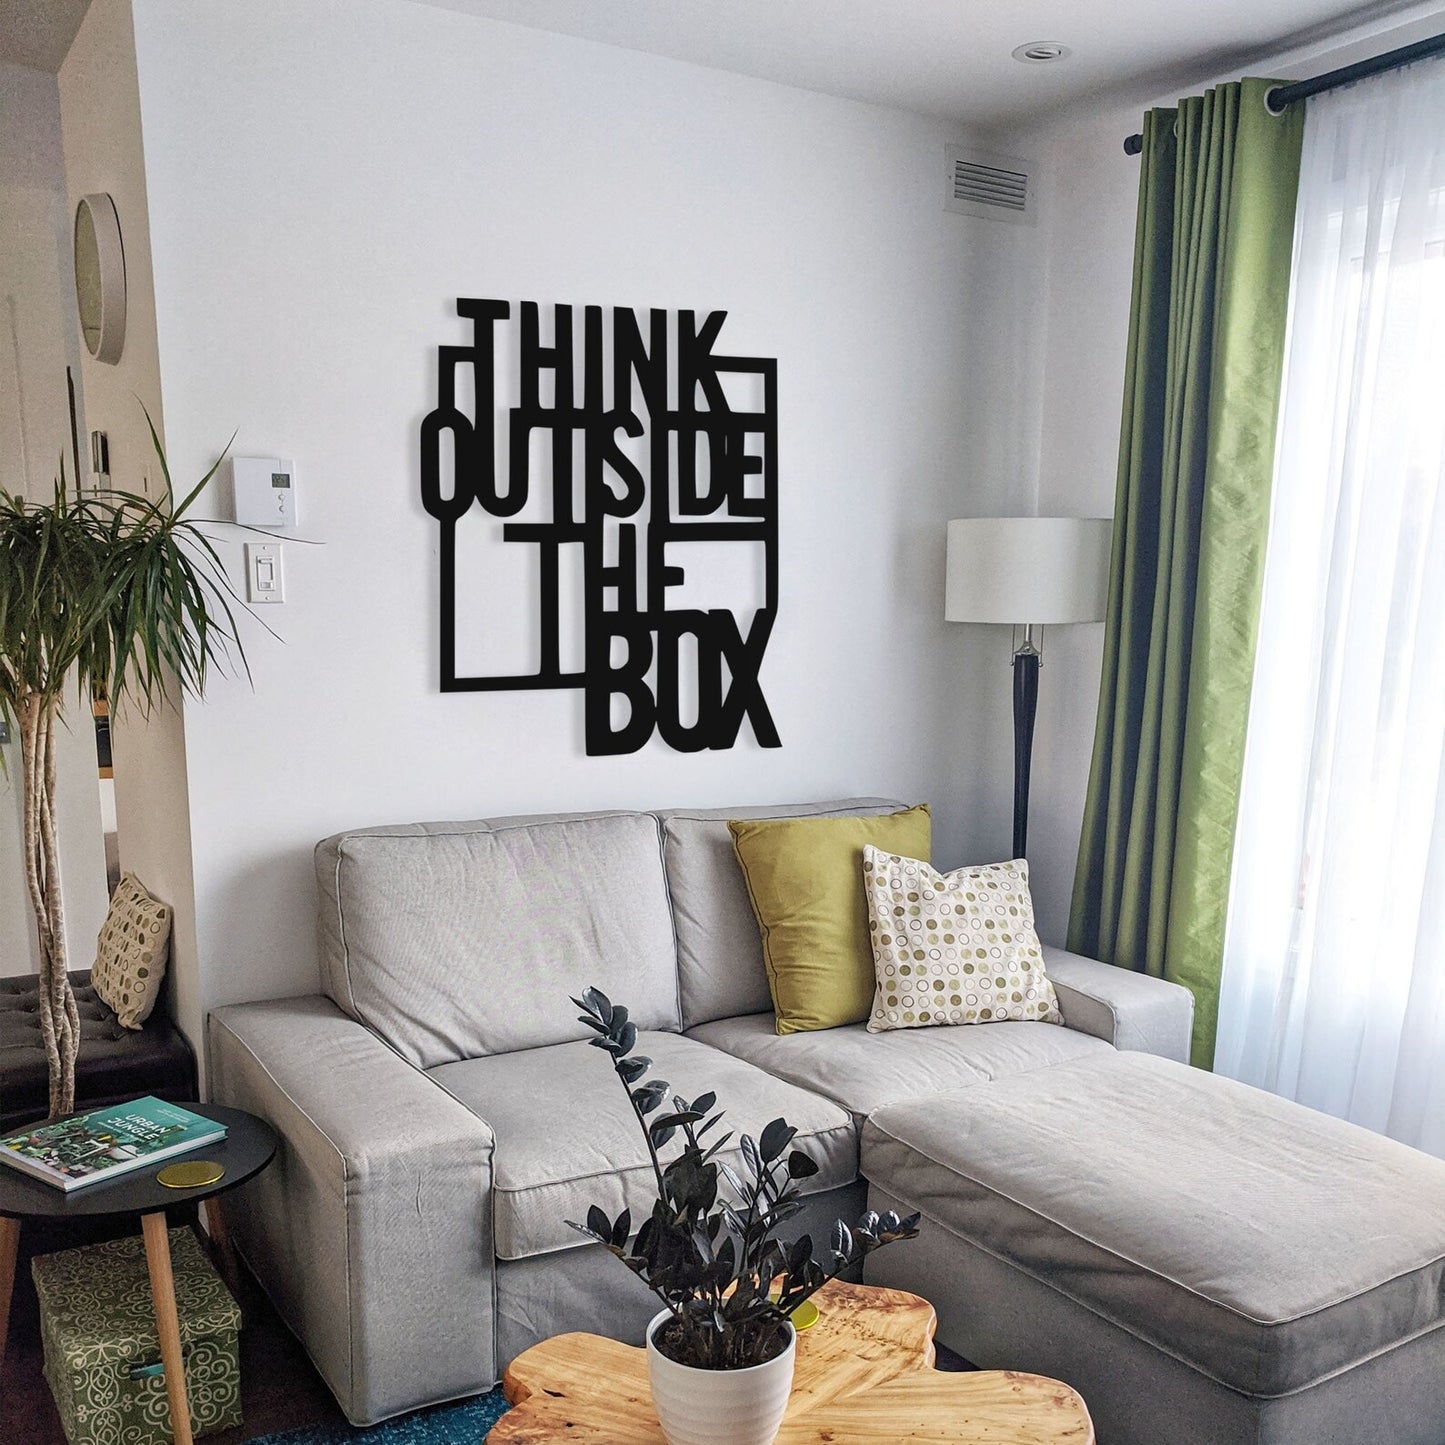 Think Outside The Box Wall Decor